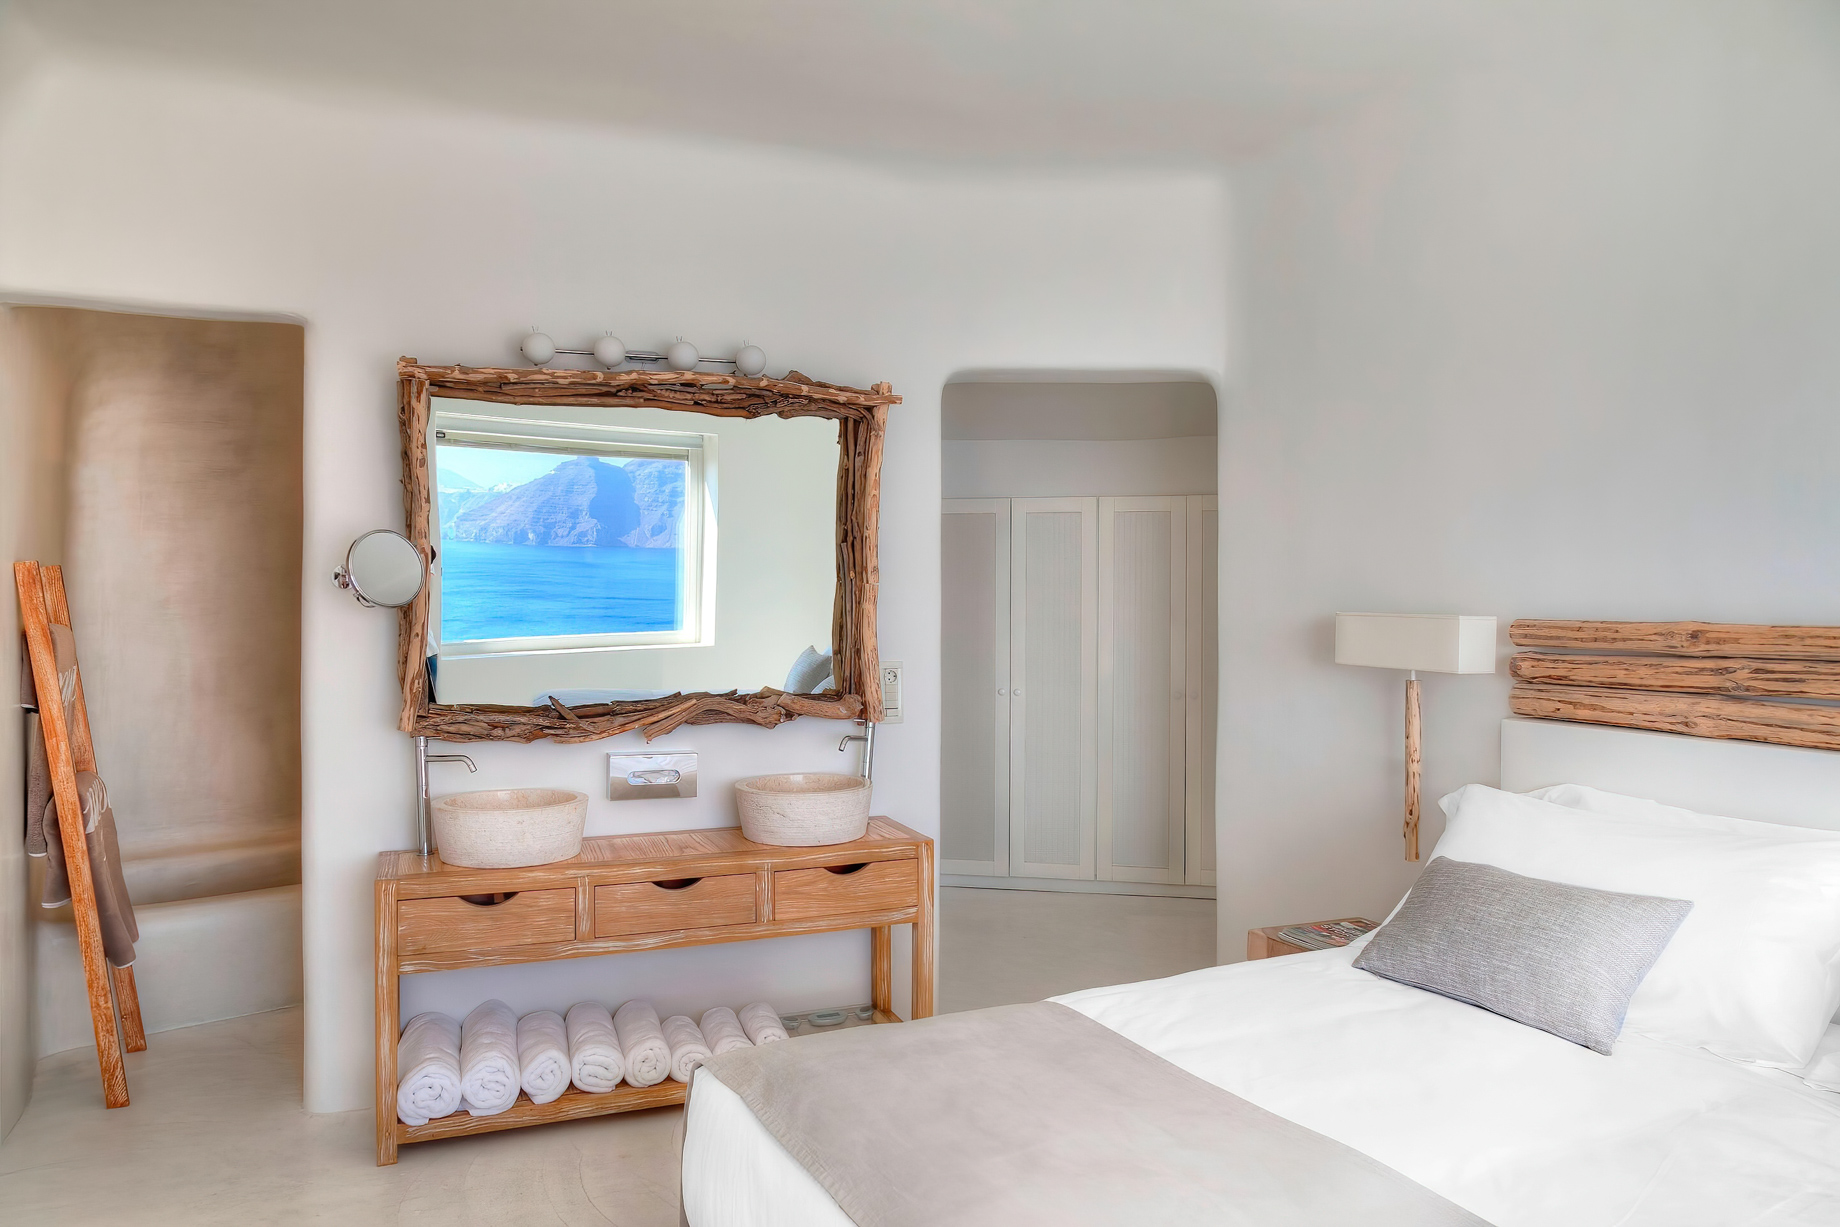 Mystique Hotel Santorini – Oia, Santorini Island, Greece – Mystery Villa Bedroom